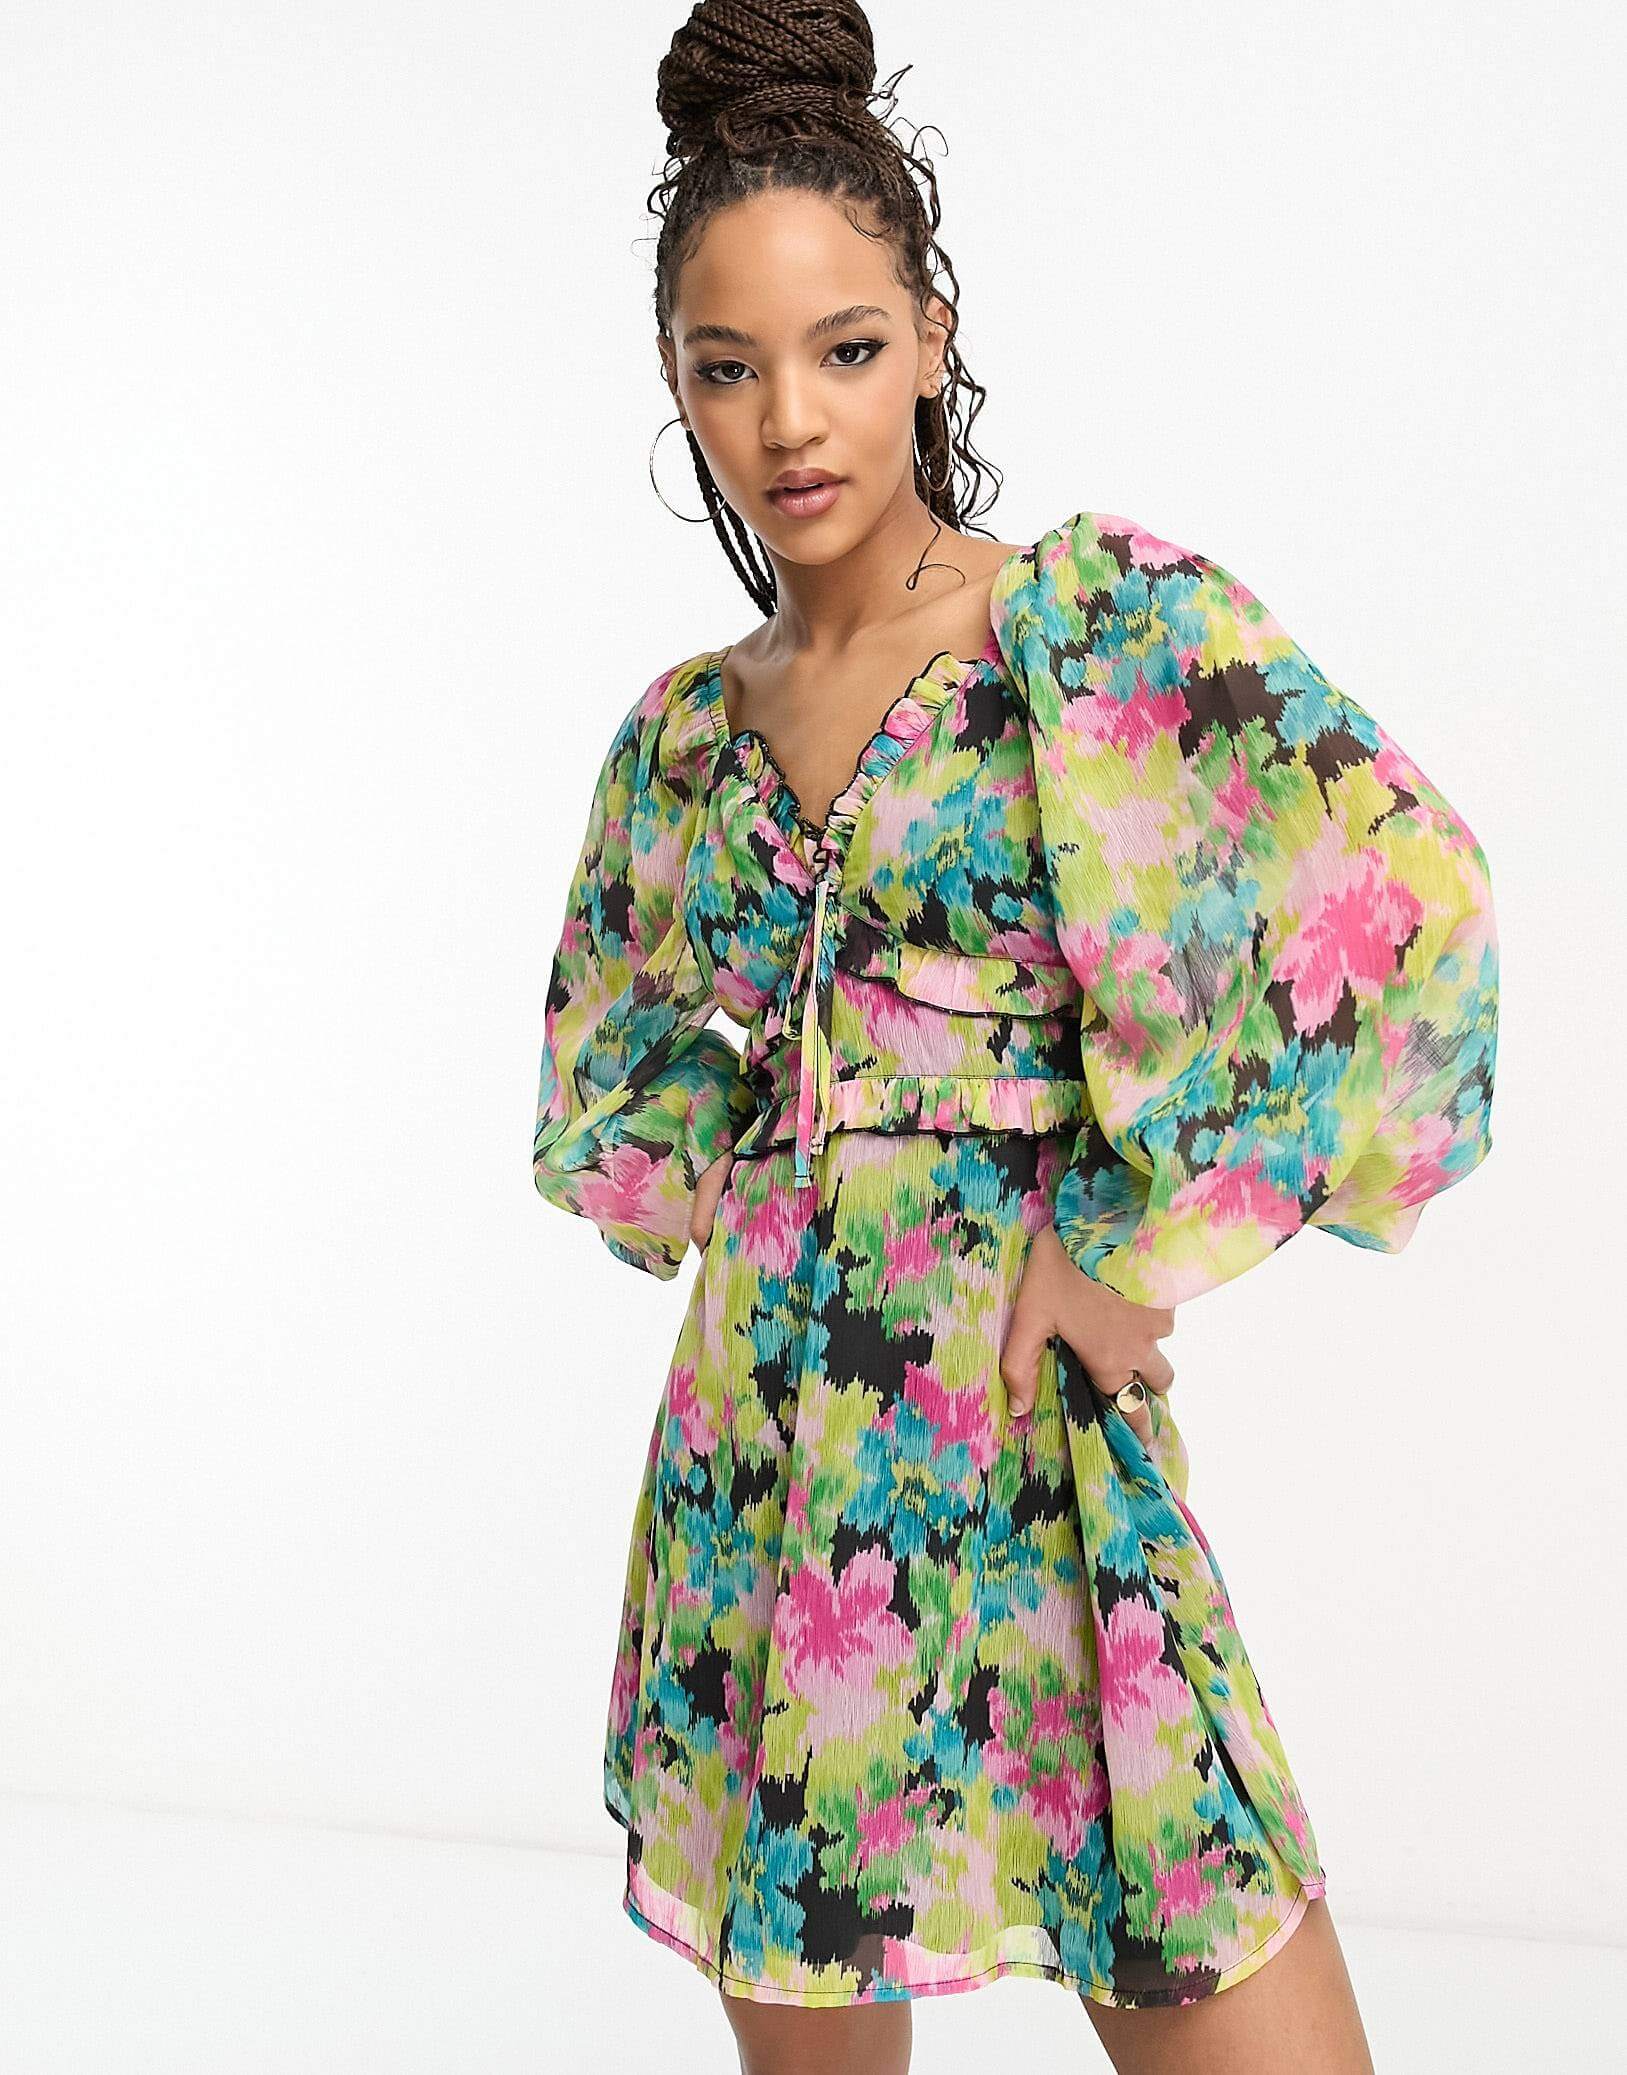 Шифоновое мини-платье Miss Selfridge Frill Detail Tiered In Bright Blurred Floral, мультиколор платье ascool с яркими цветами 46 размер новое